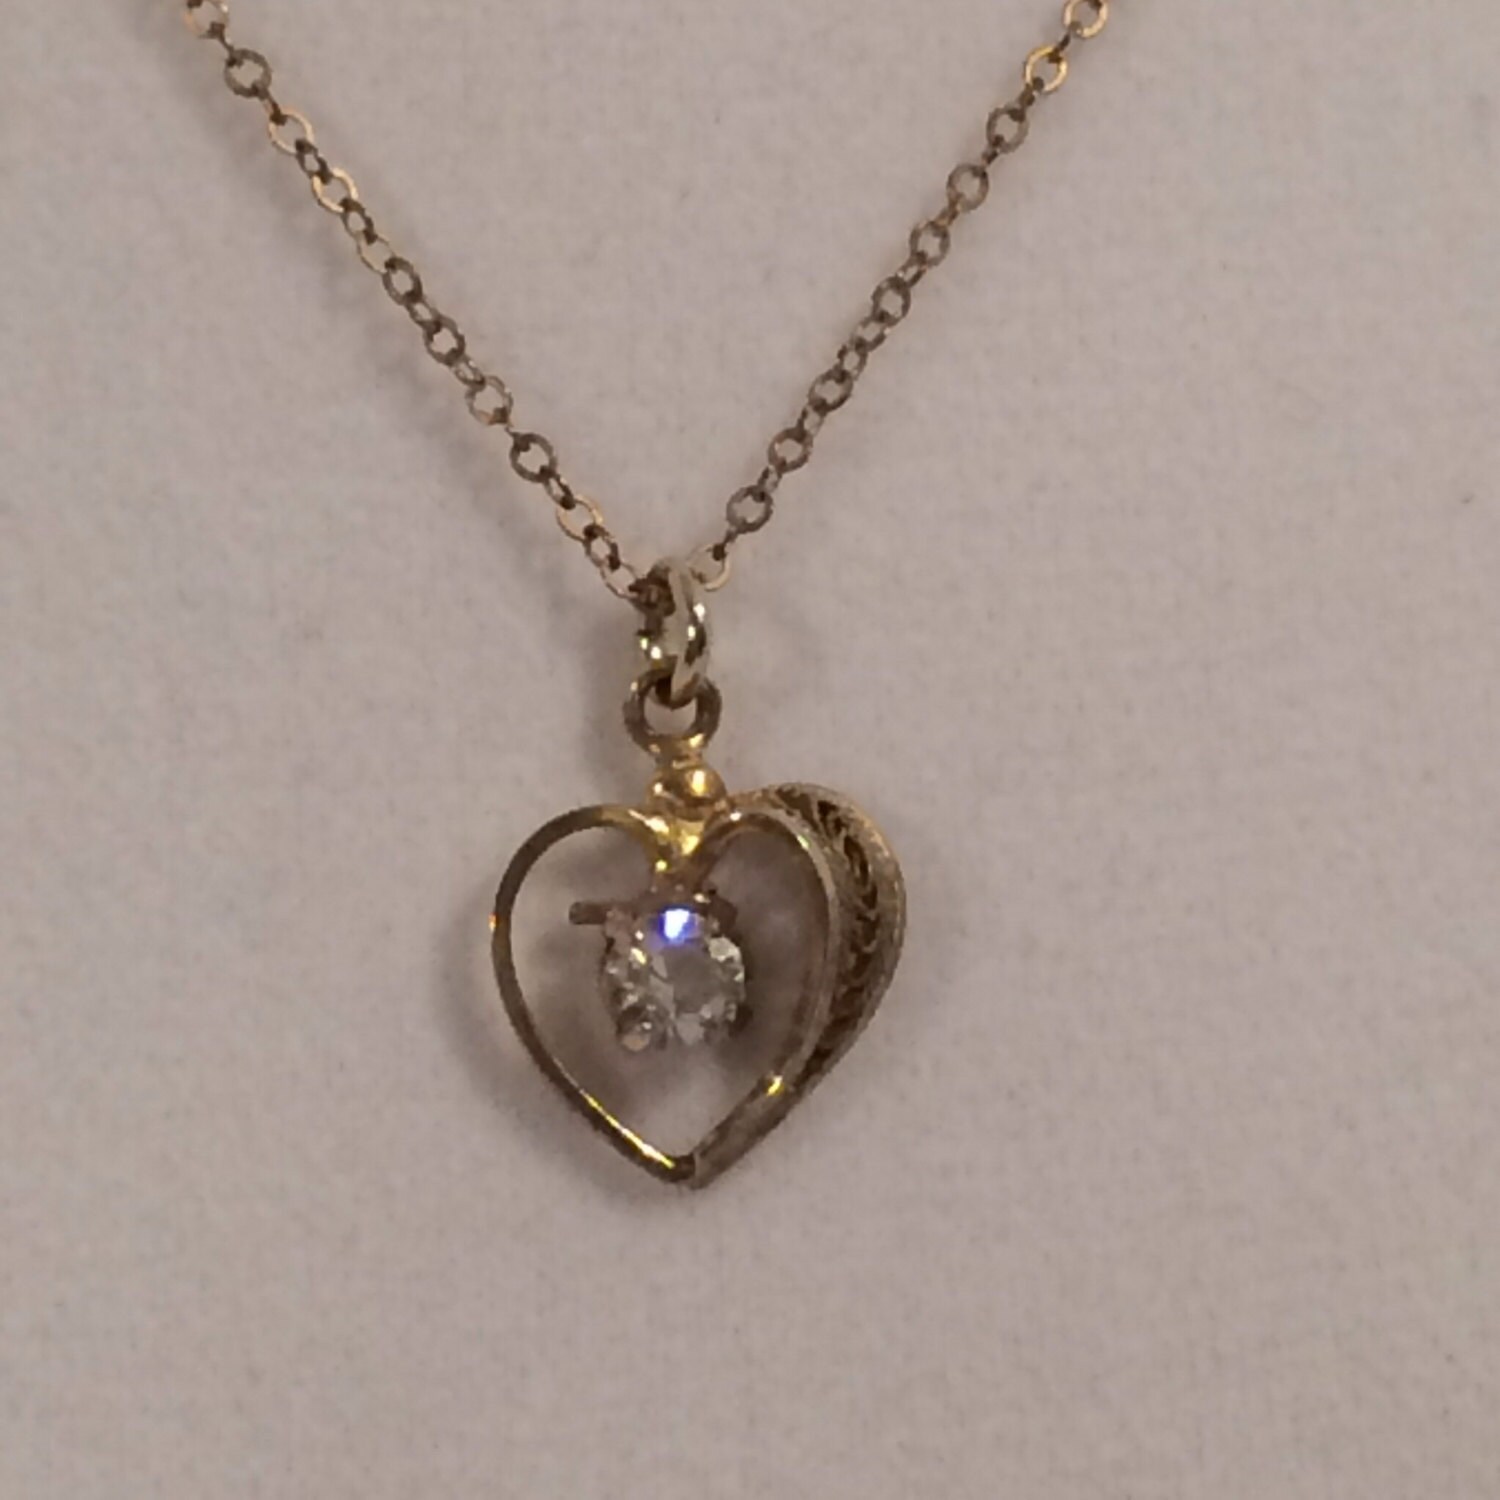 Vintage 1/20 12K GF Gold Filled Cz Heart Pendant by JewelryGeeks